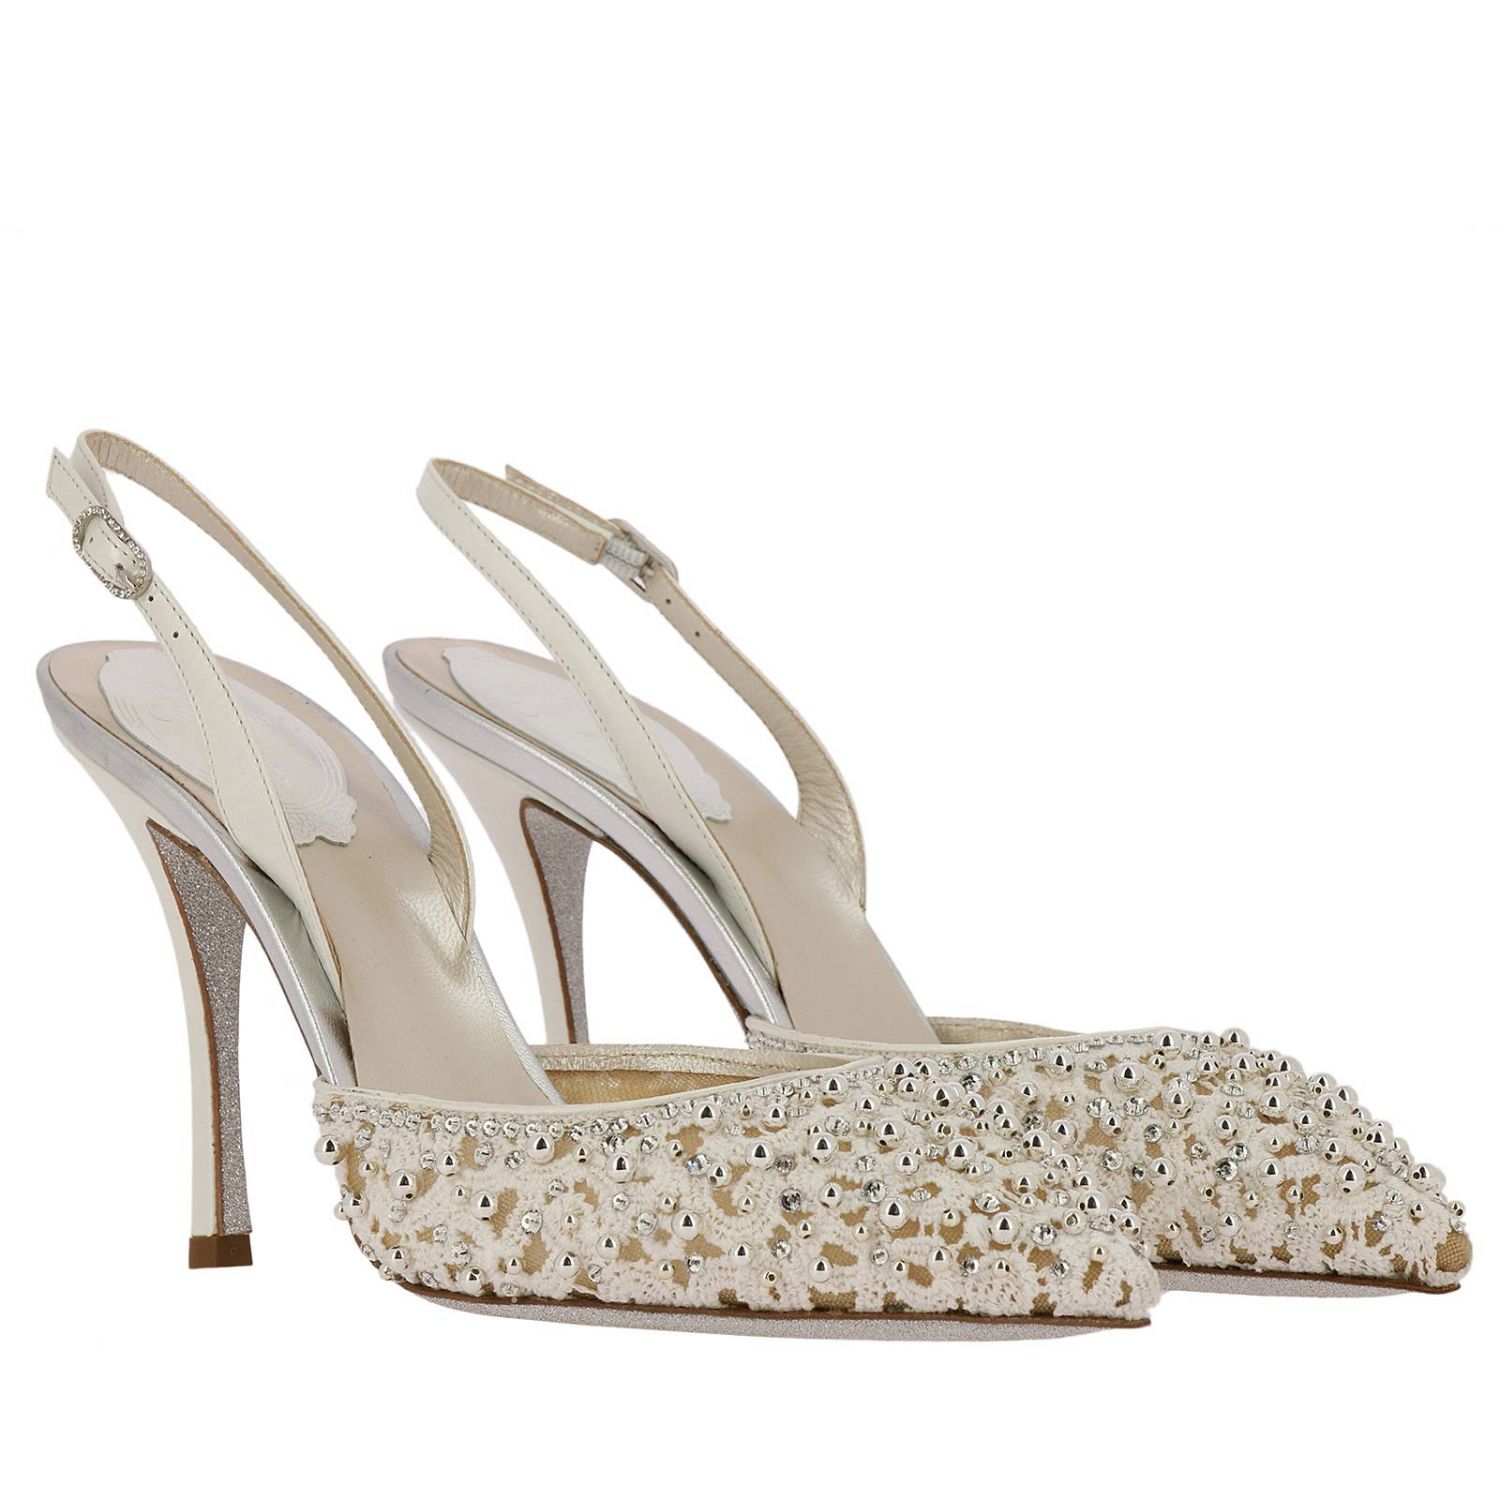 Rene Caovilla Outlet: Shoes women | Pumps Rene Caovilla Women White ...